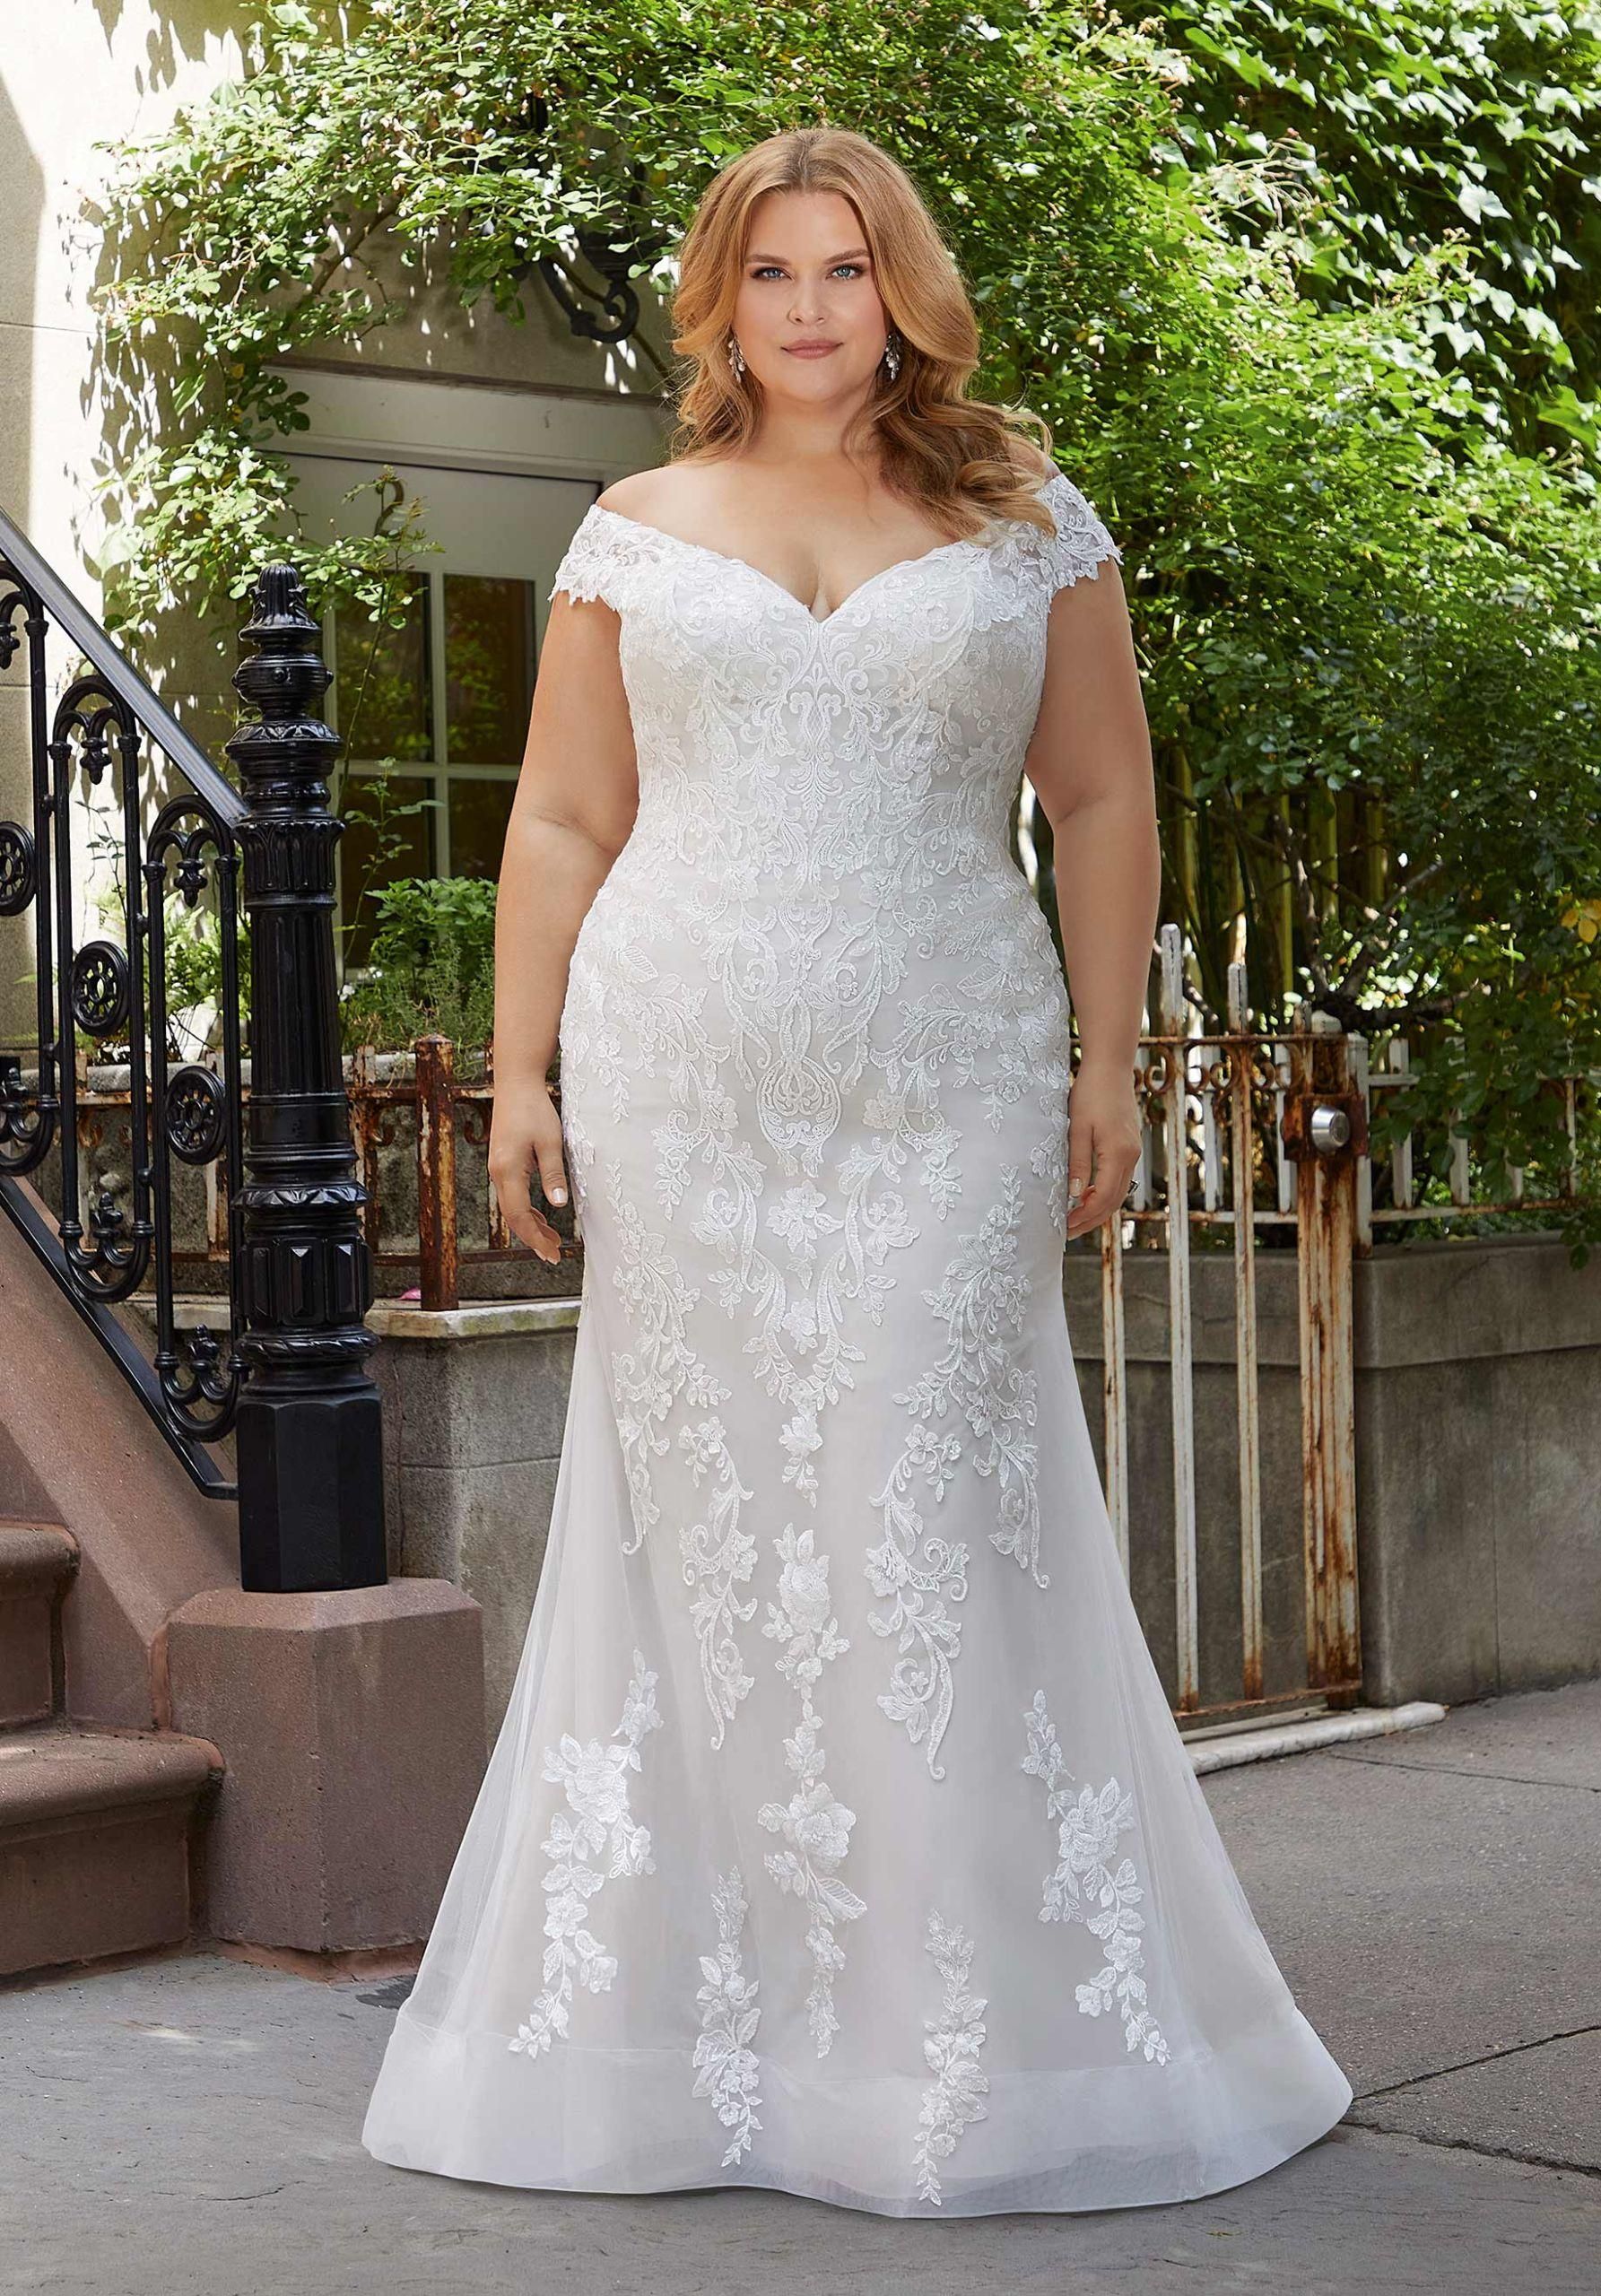 Plus-Size Wedding Dresses Guide For Curvy Brides!